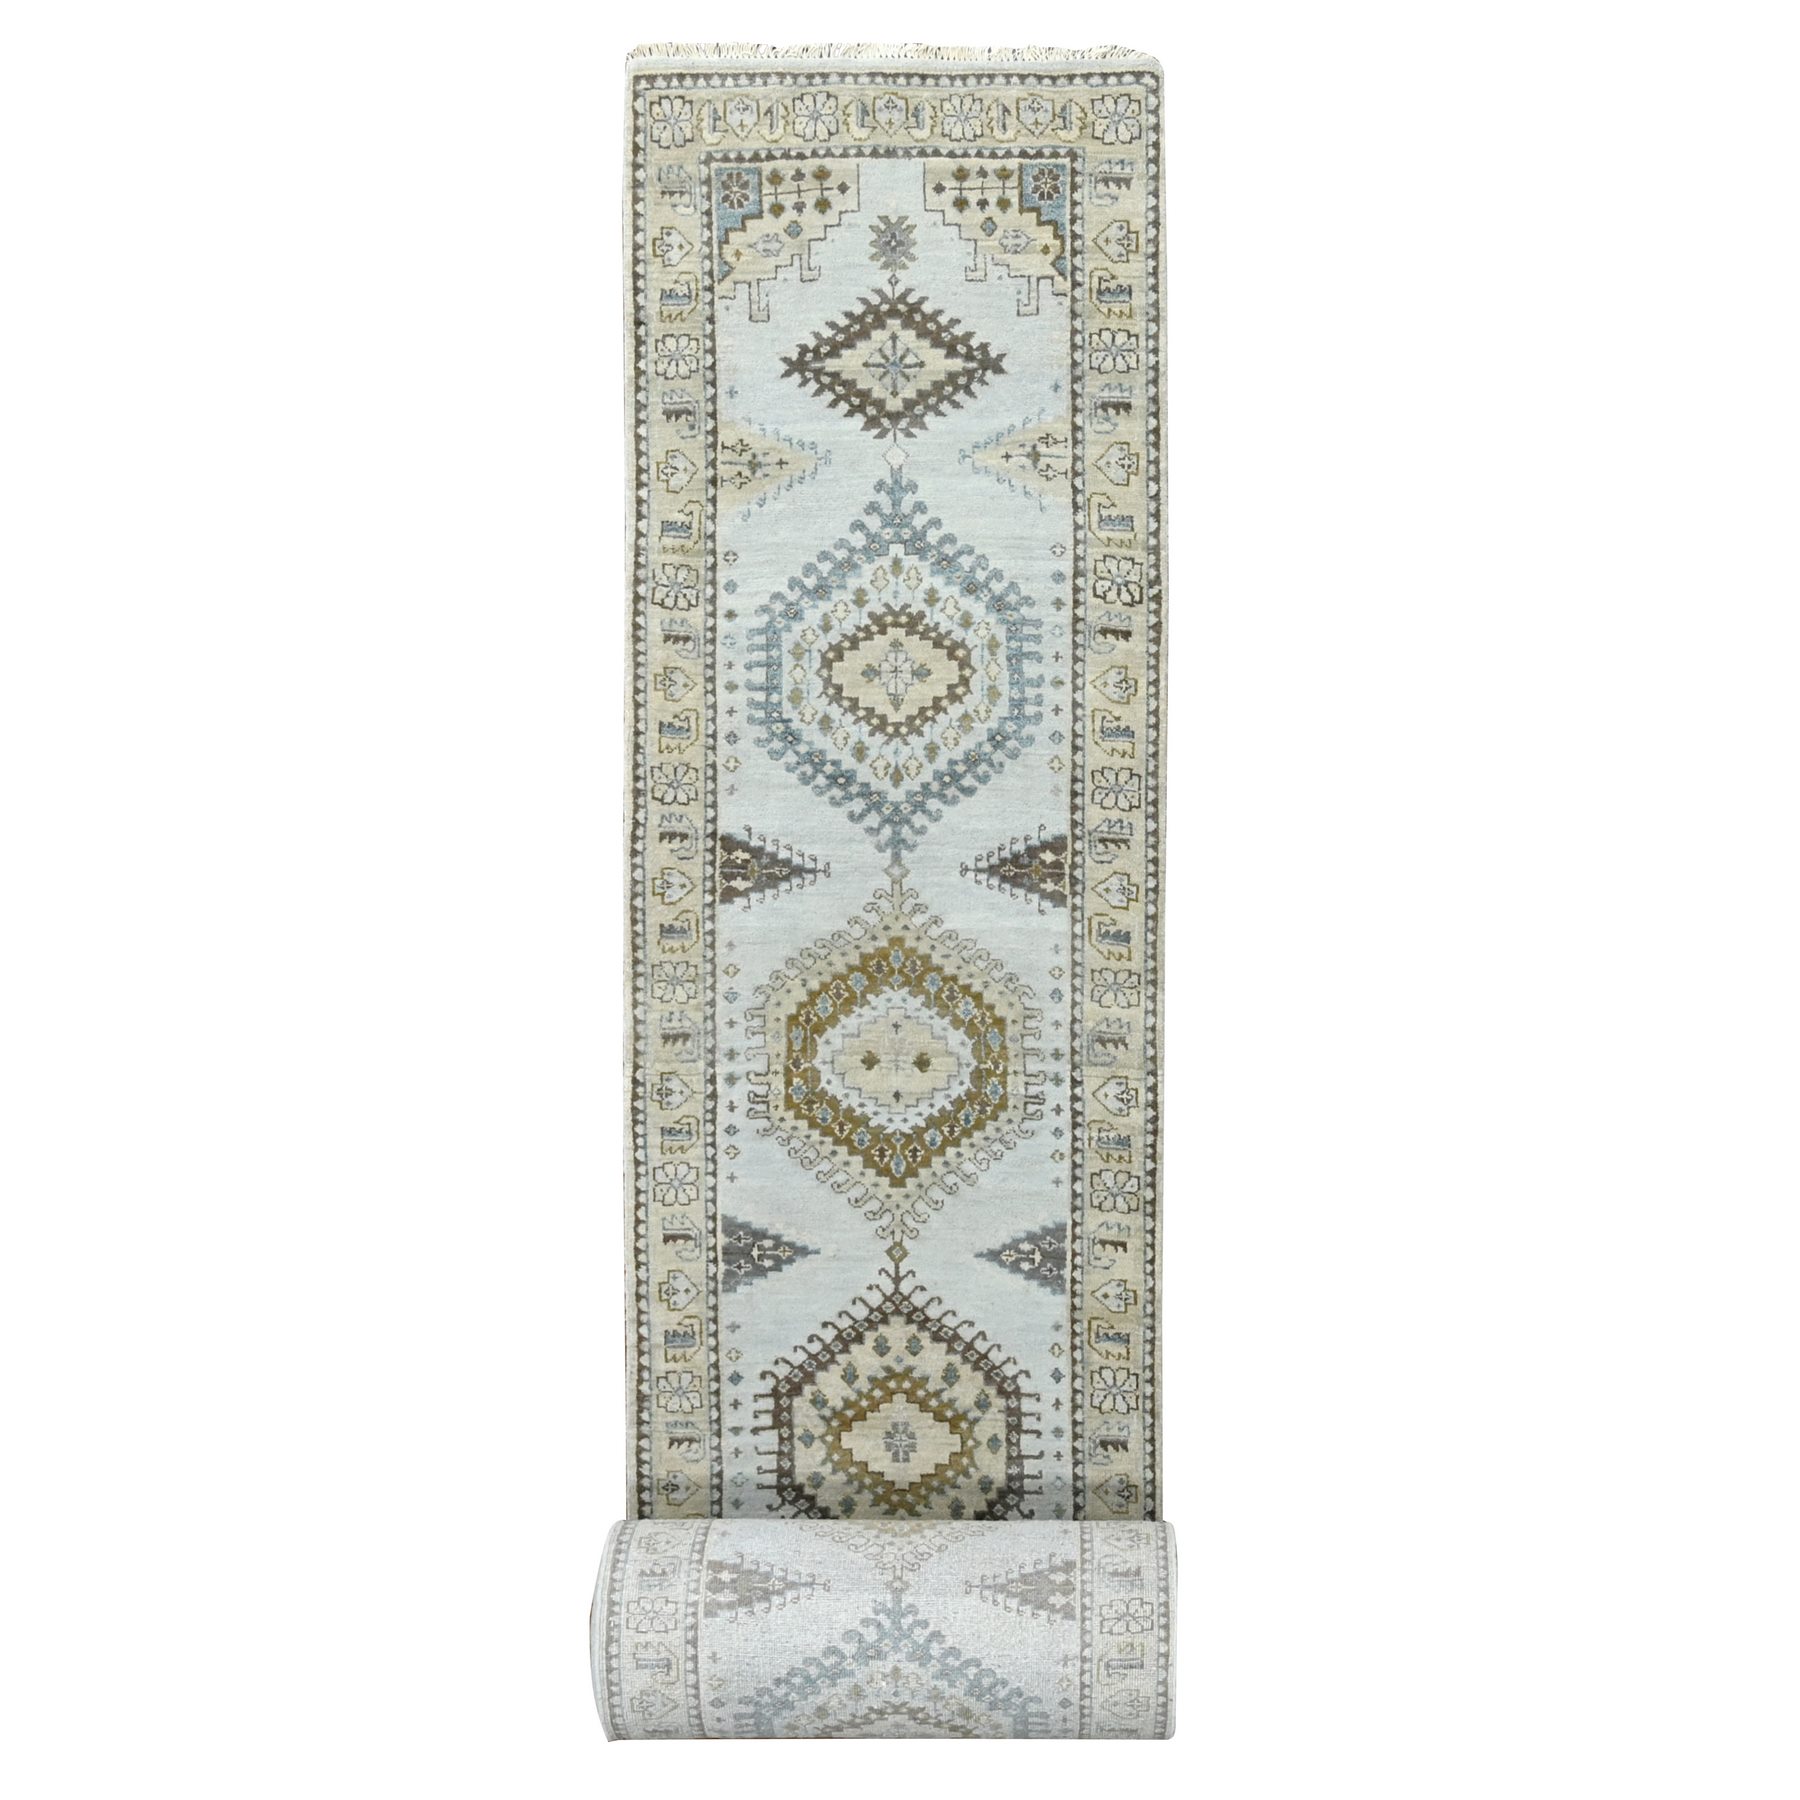 Skylight Gray, Pure Wool Persian Village Influence Design, Hand Knotted Large Geometrical Motifs, Denser Weave, Oriental XL Runner Rug